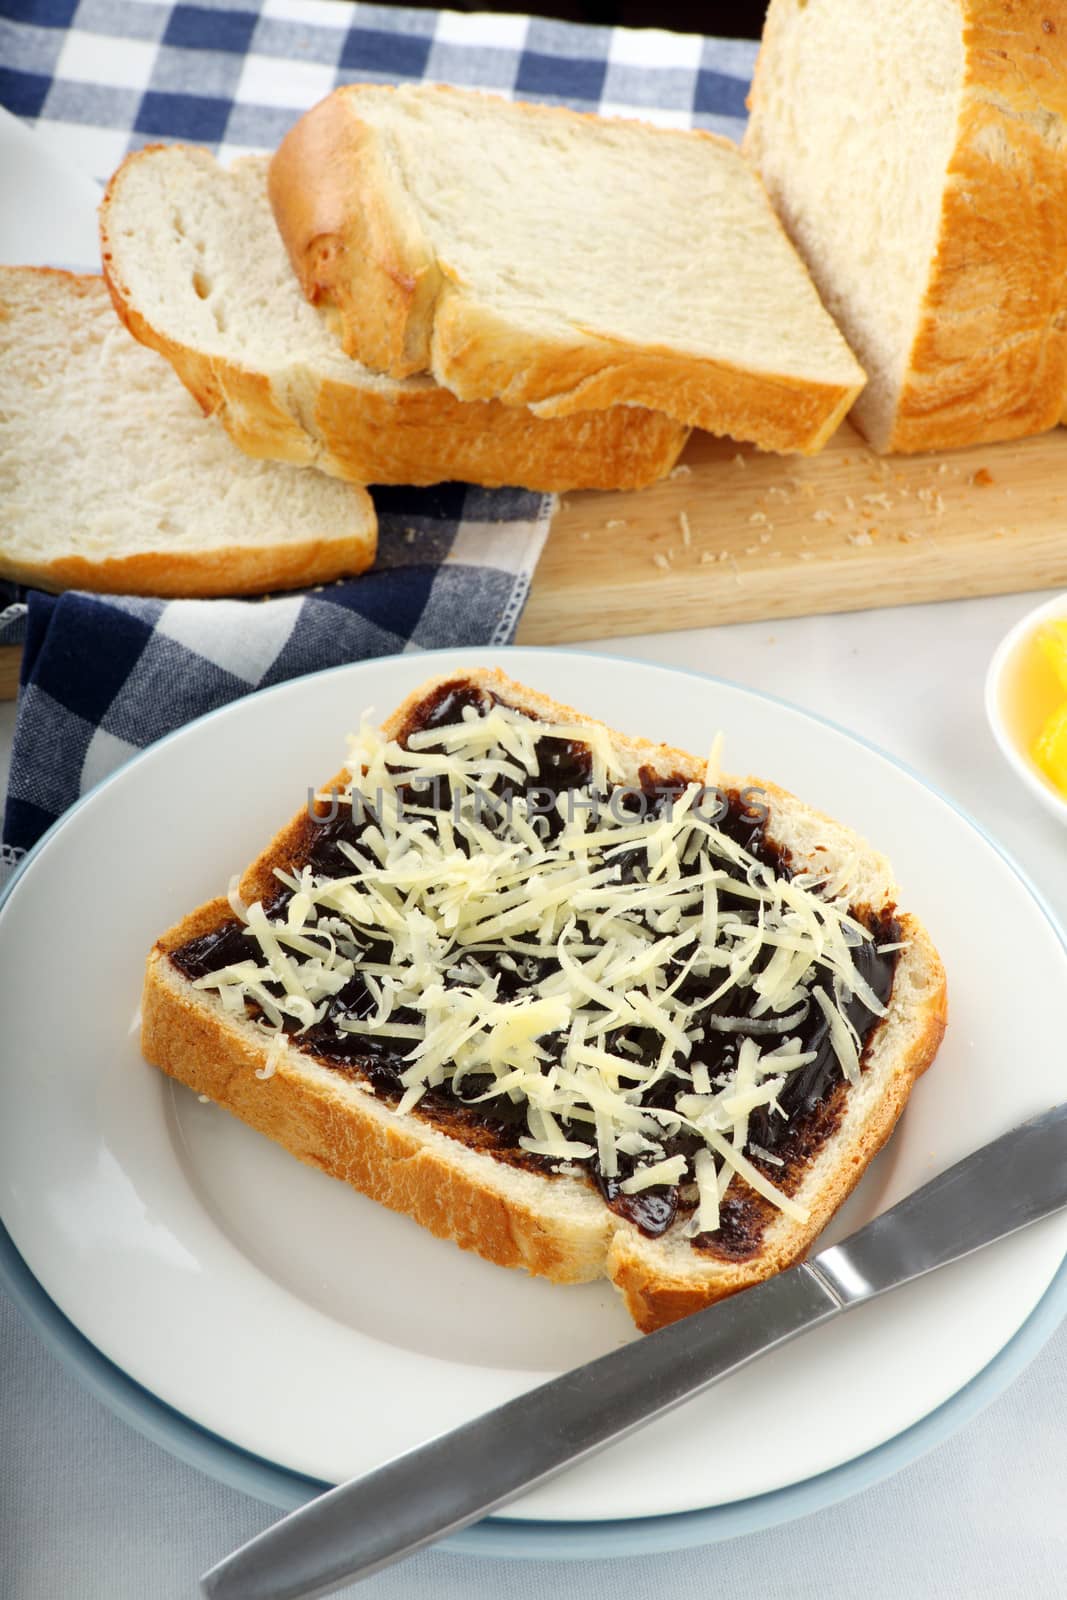 Vegemite And Cheese Sandwich by jabiru